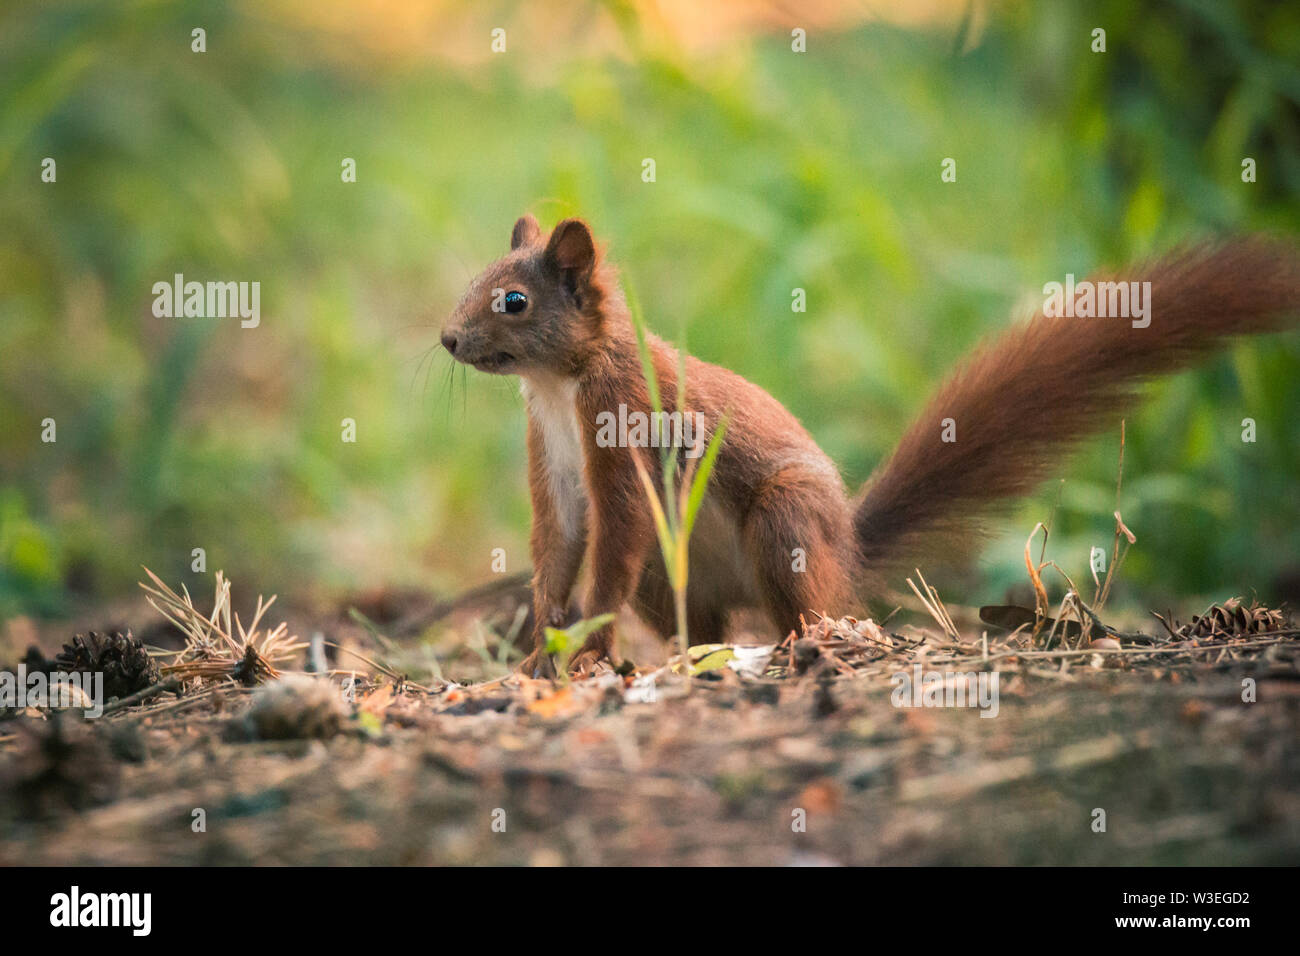 Eichhörnchen im Herbst Wald Szene. Herbst Wald Eichhörnchen. Eichhörnchen im Herbst Wald Szene. Stockfoto